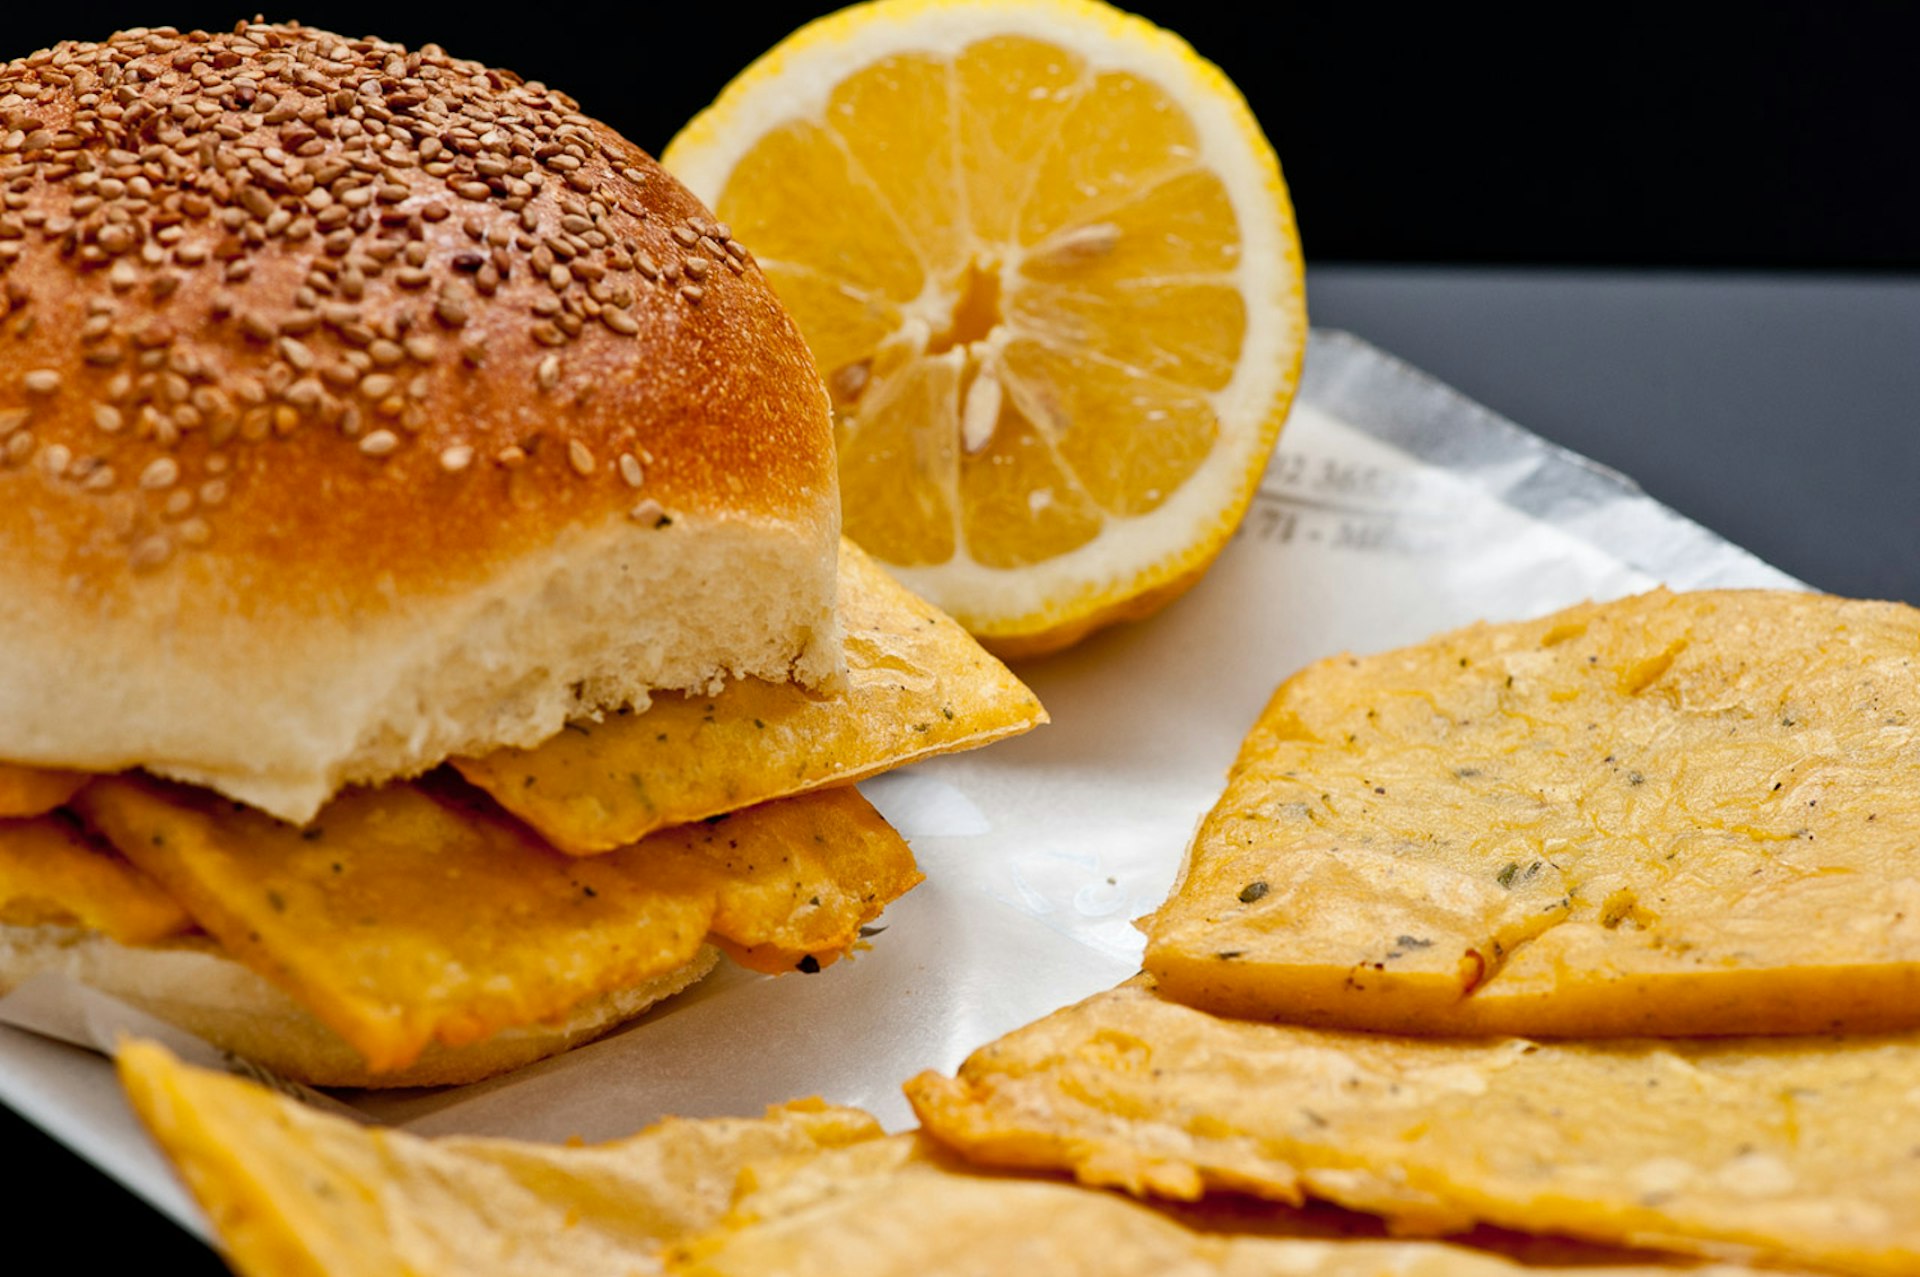 Pane e panelle sandwiches feature chickpea flour fritters and a splash of lemon